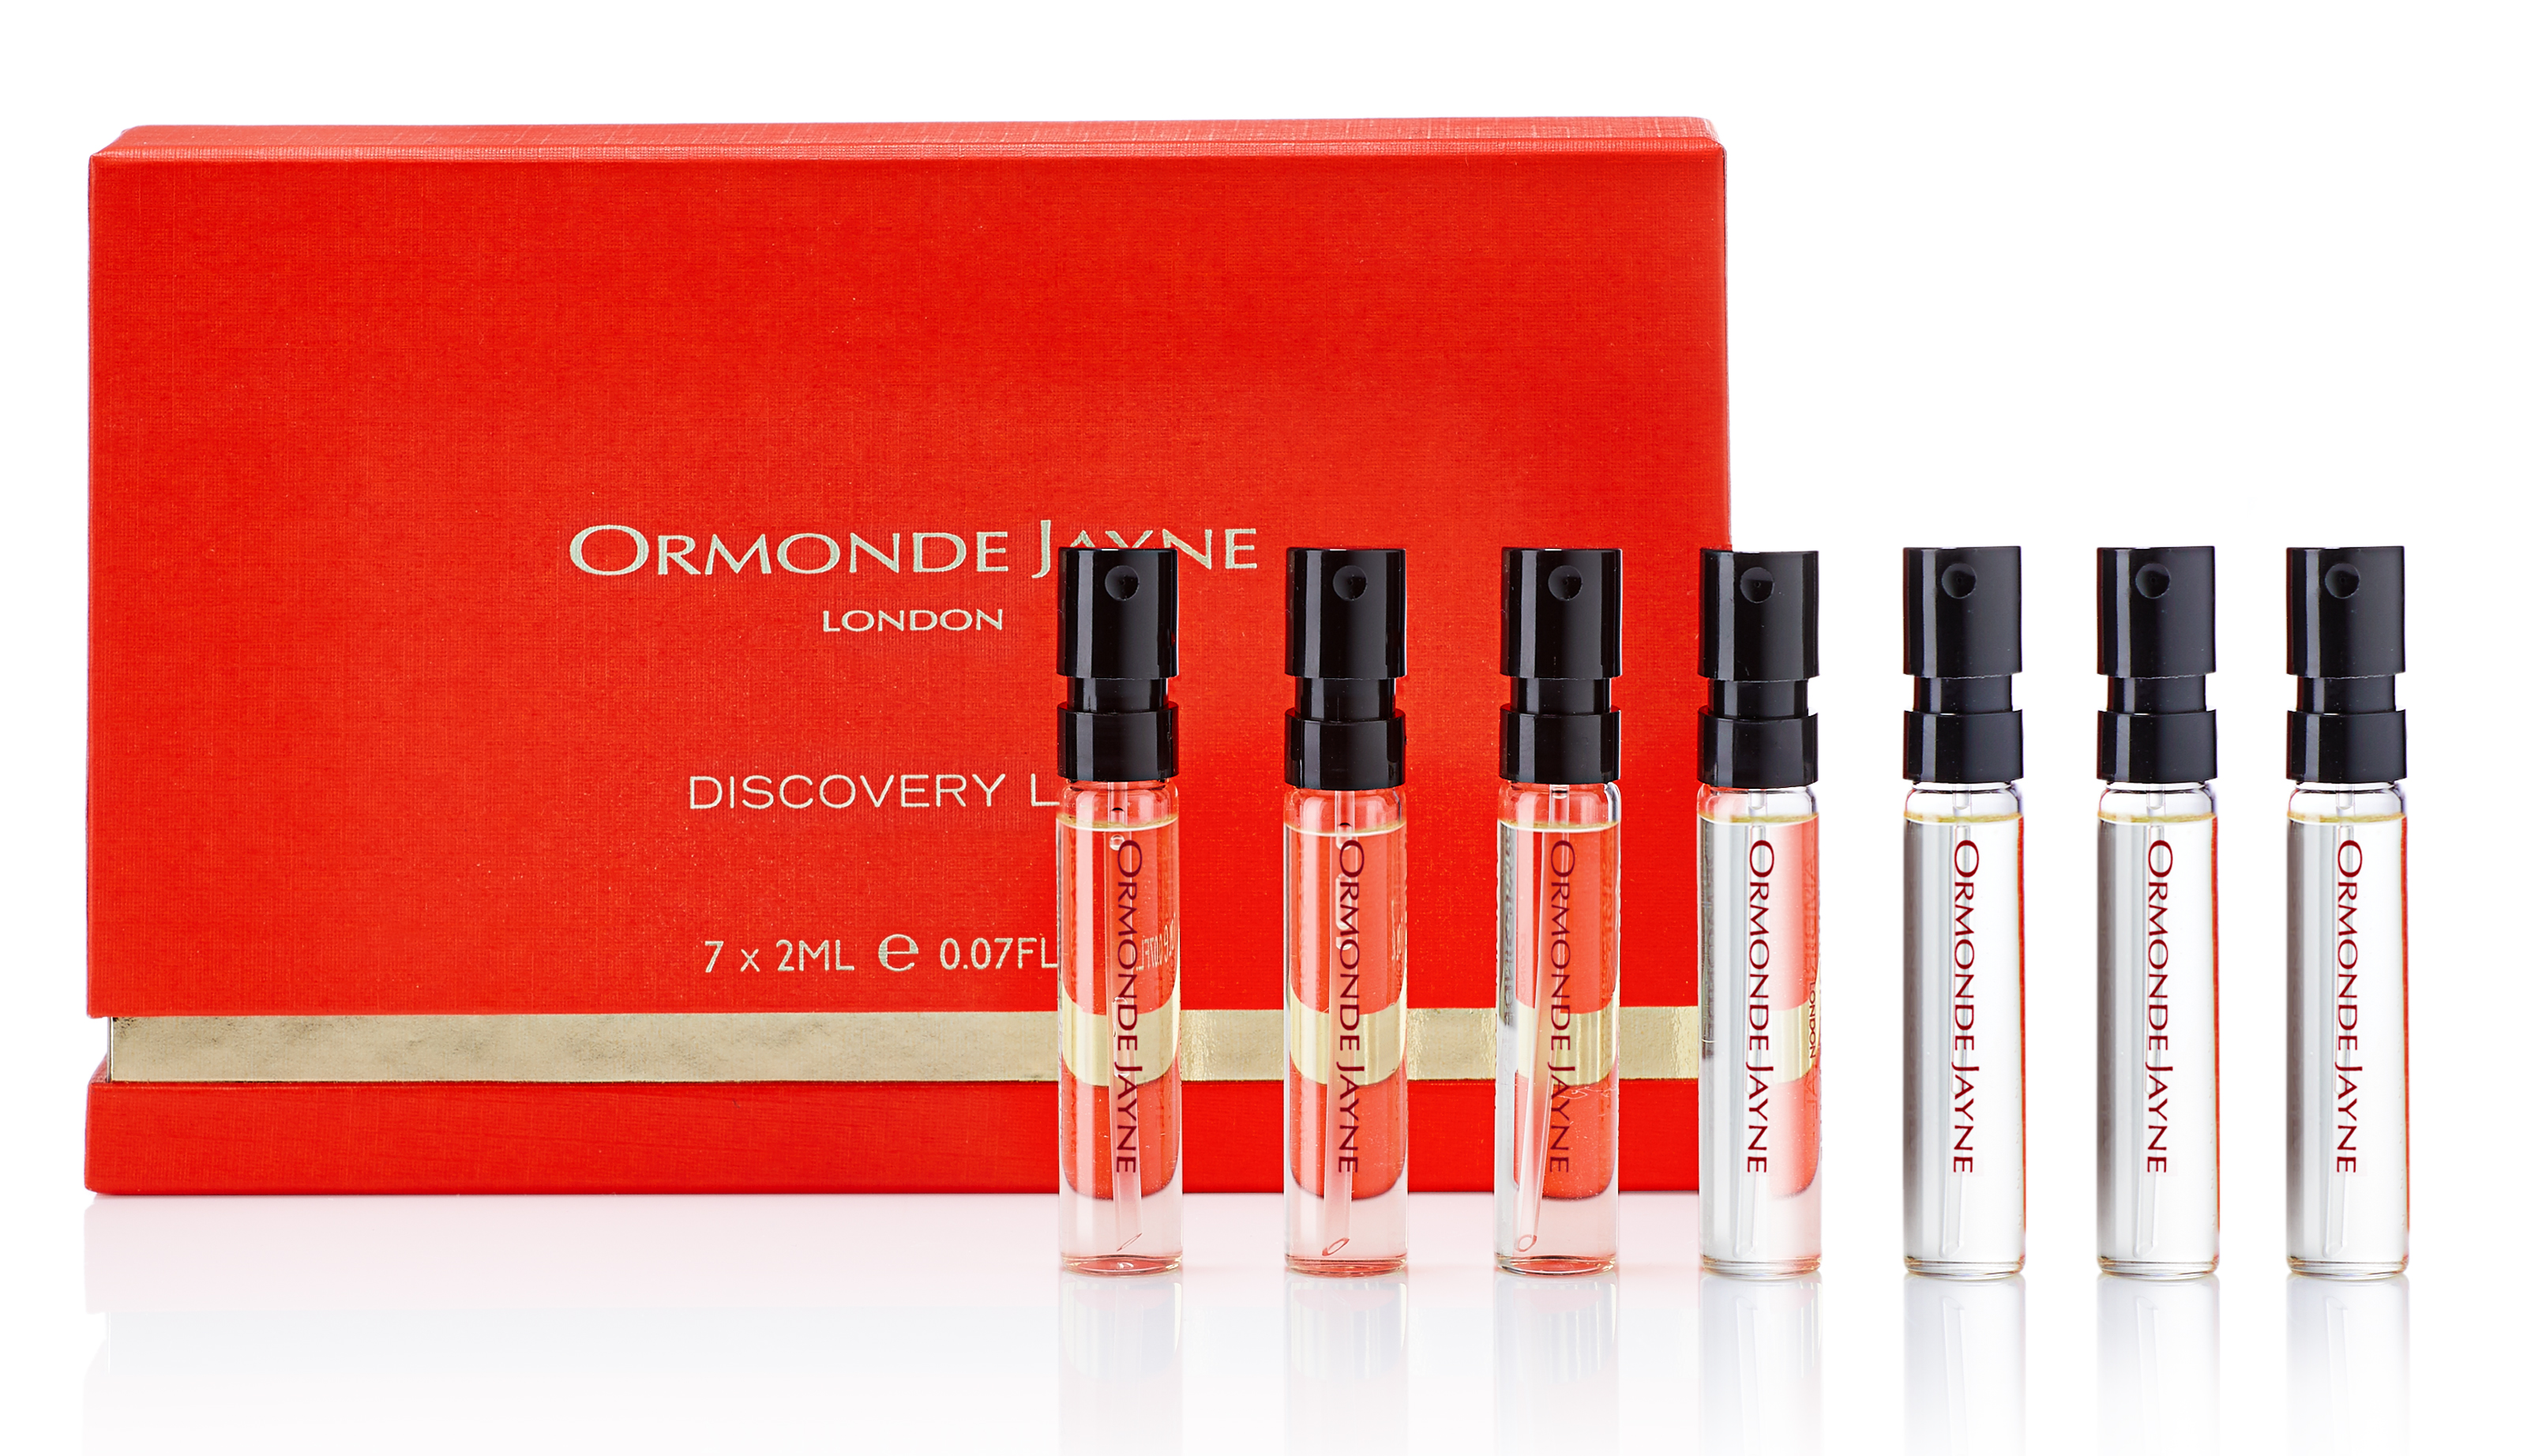 Ormonde Jayne Discovery Lab Perfume Set